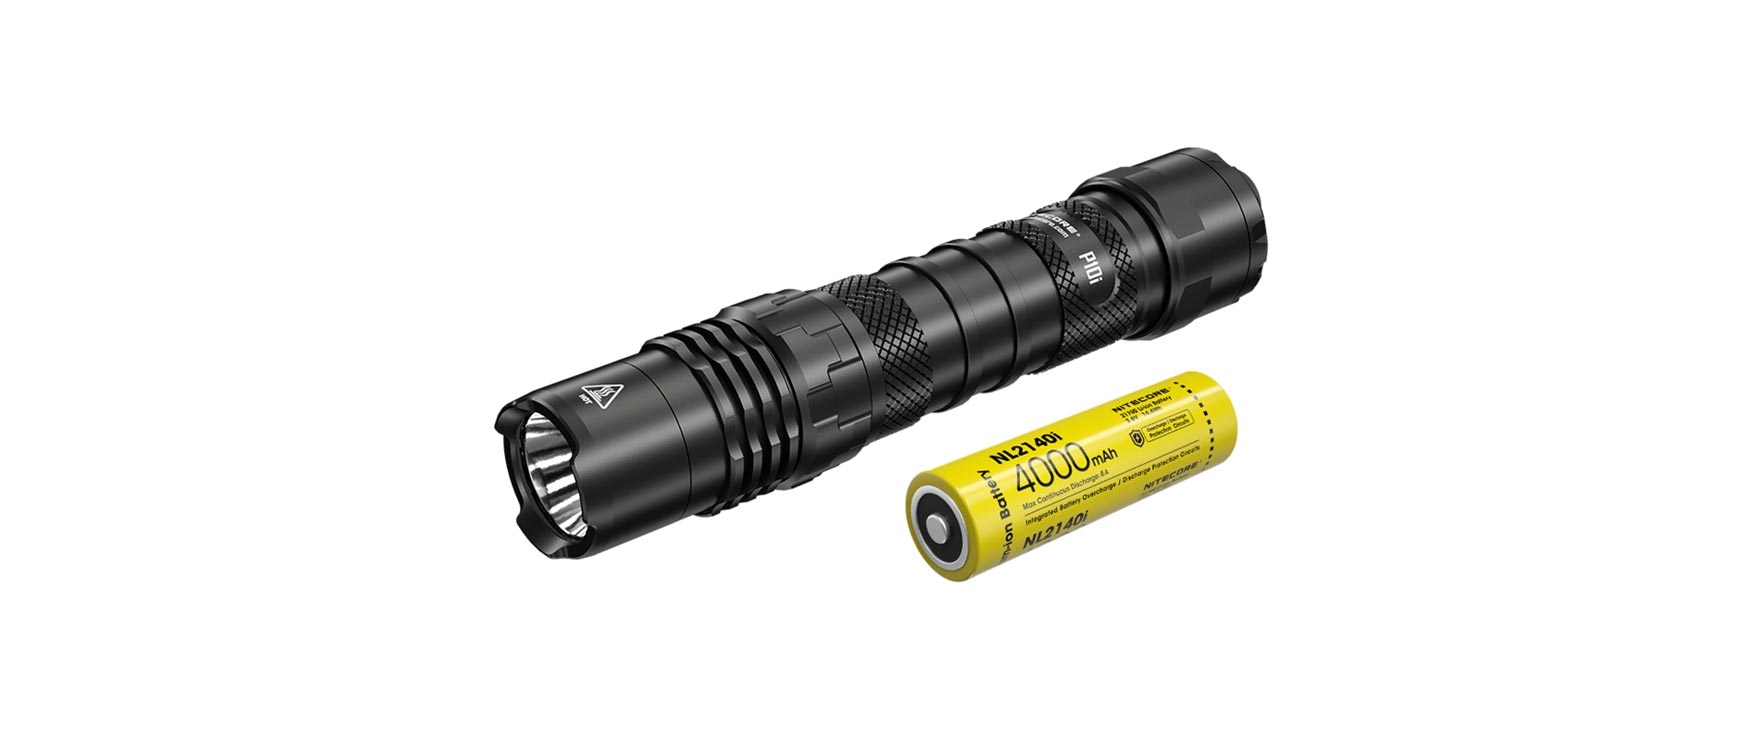 3. NITECORE P10i 1800 Lumen USB-C Rechargeable Tactical Flashlight